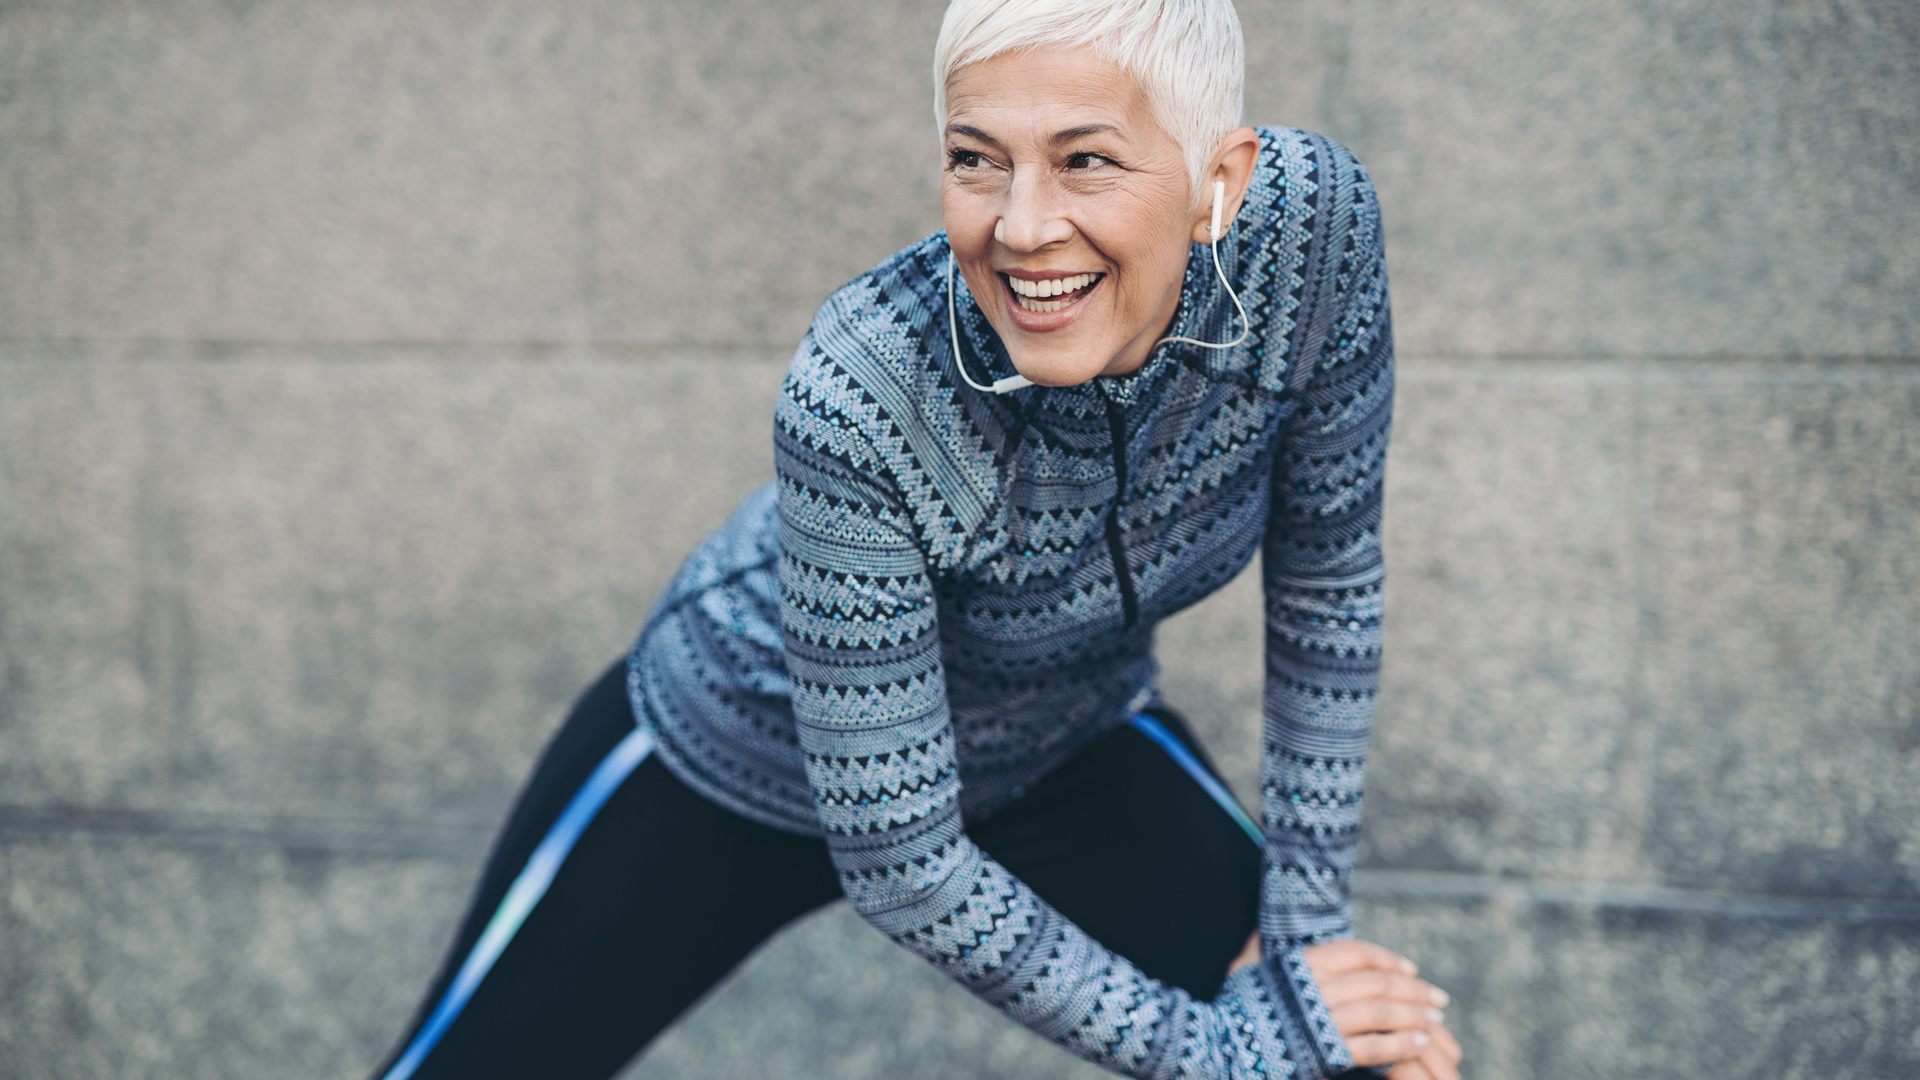 Make it joyful: exercise is key to keeping your bone health